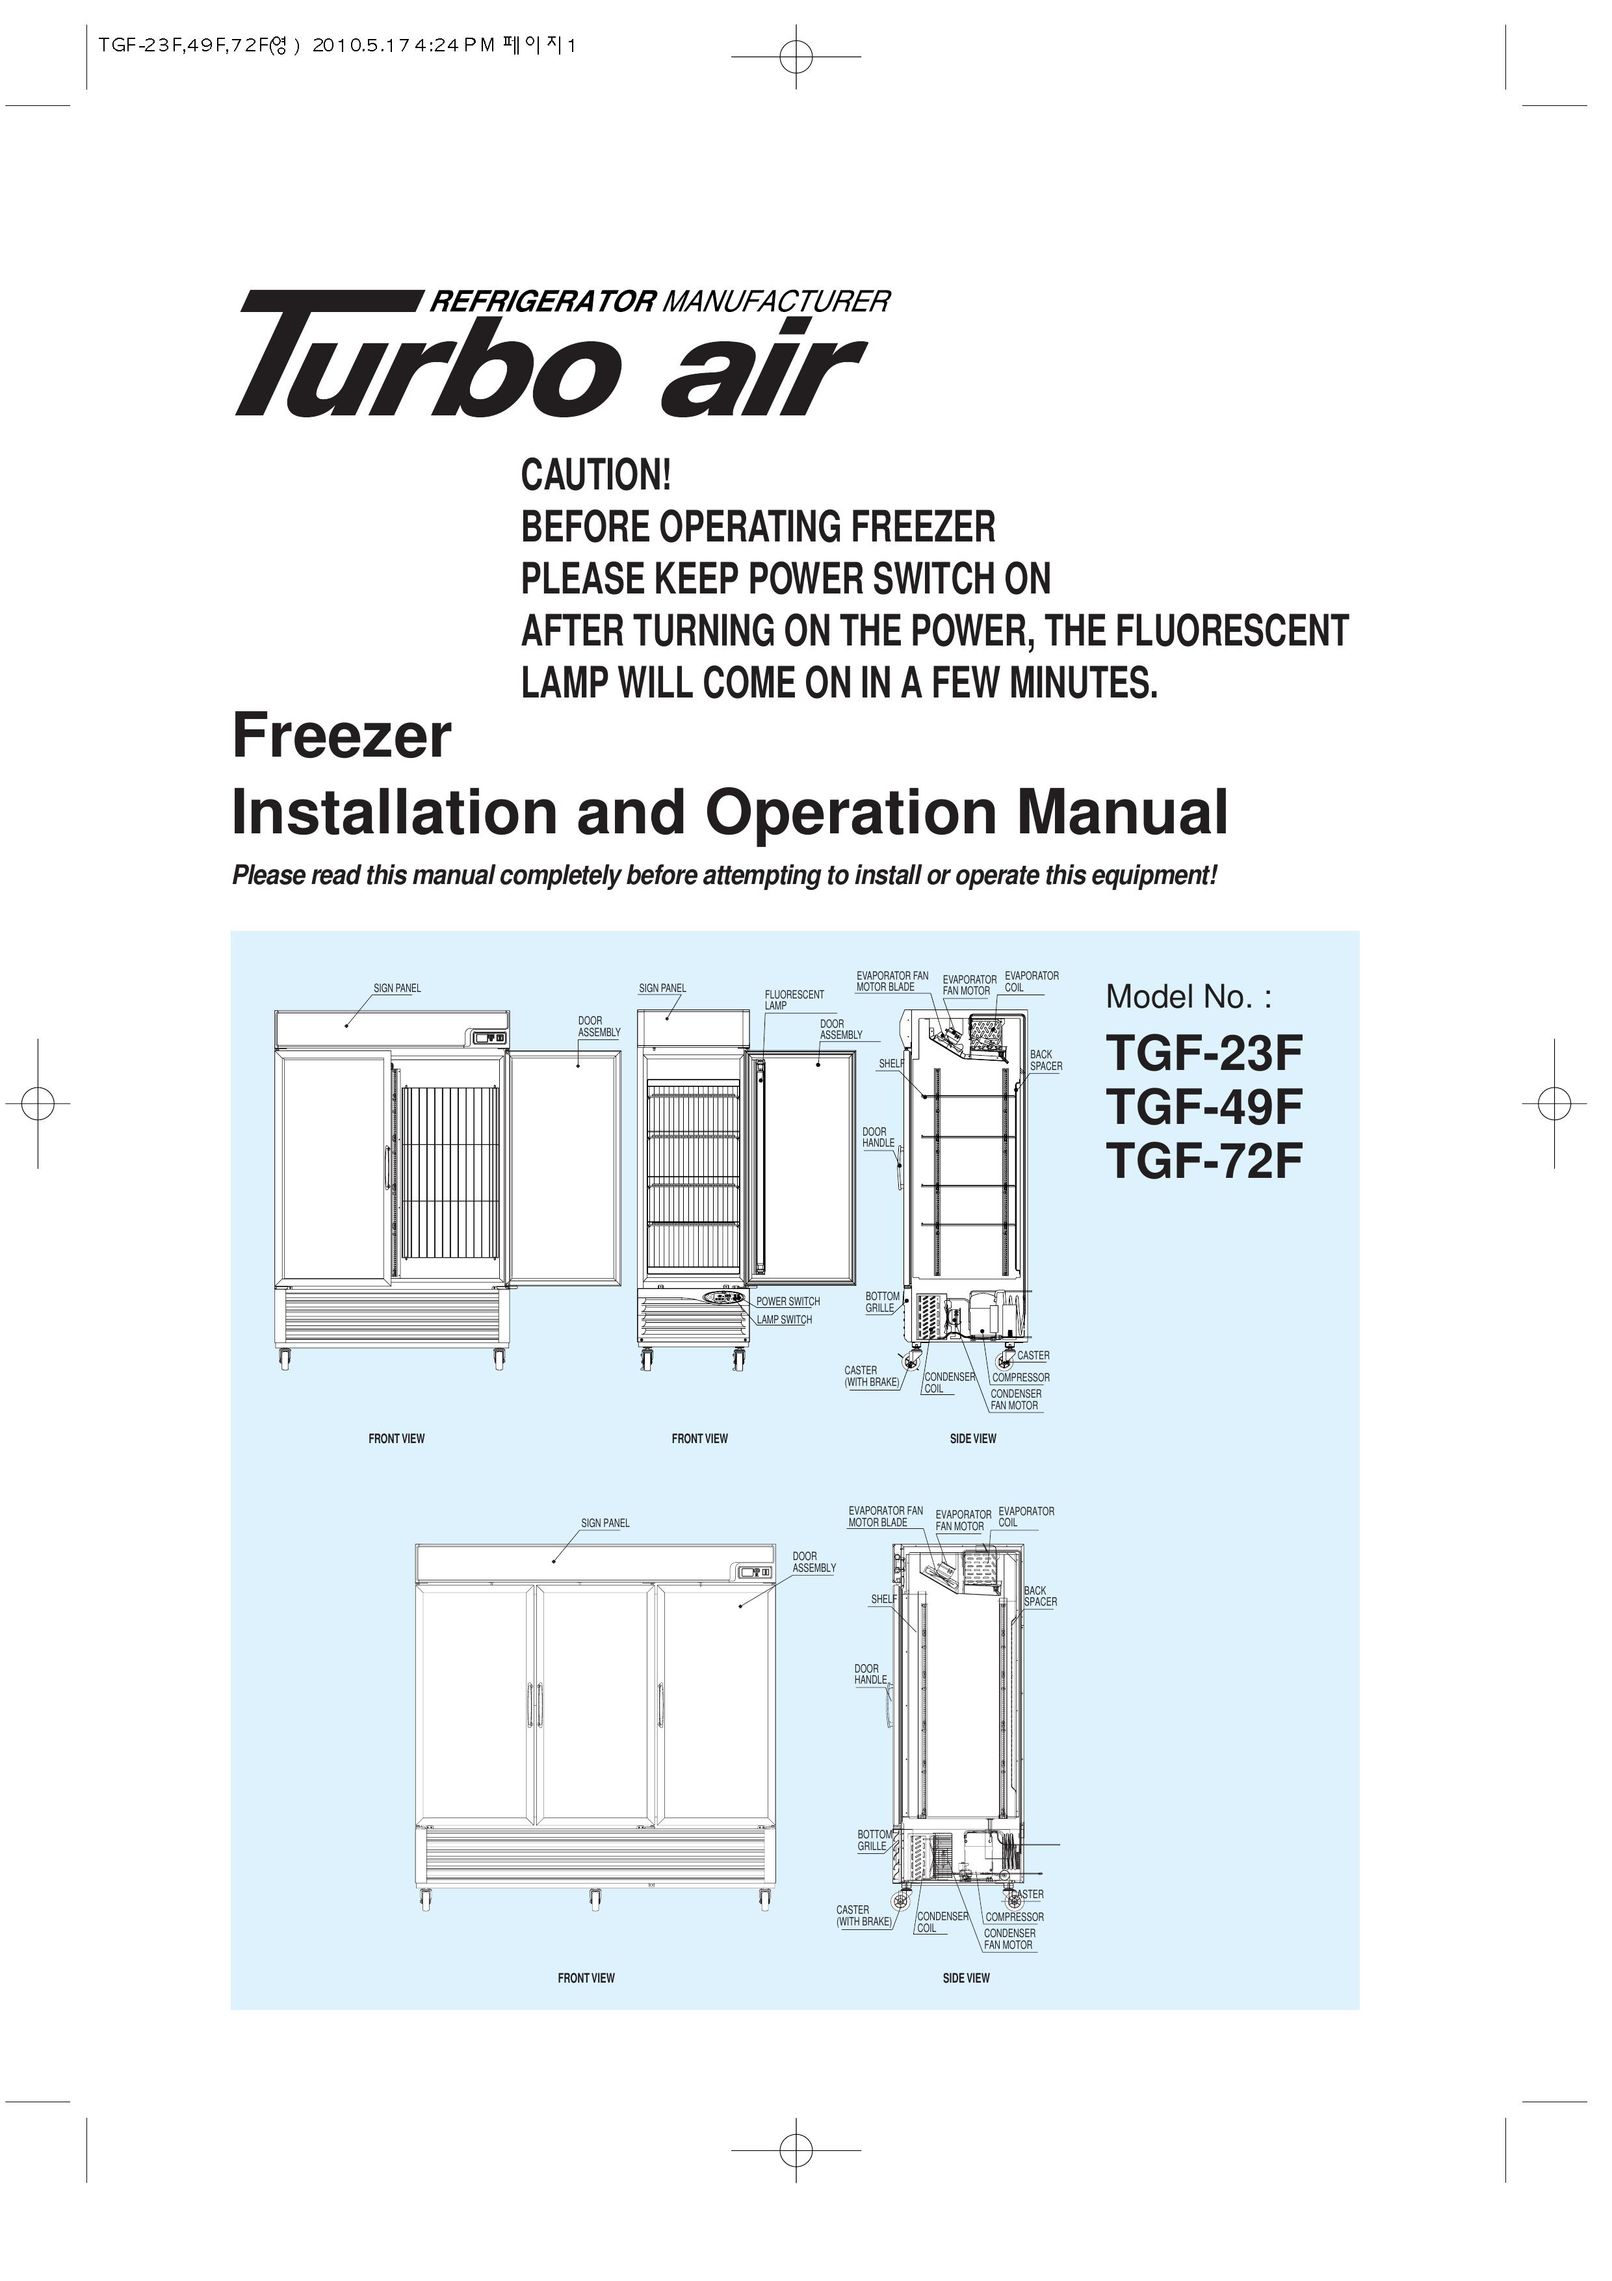 Turbo Air TGF-72F Freezer User Manual